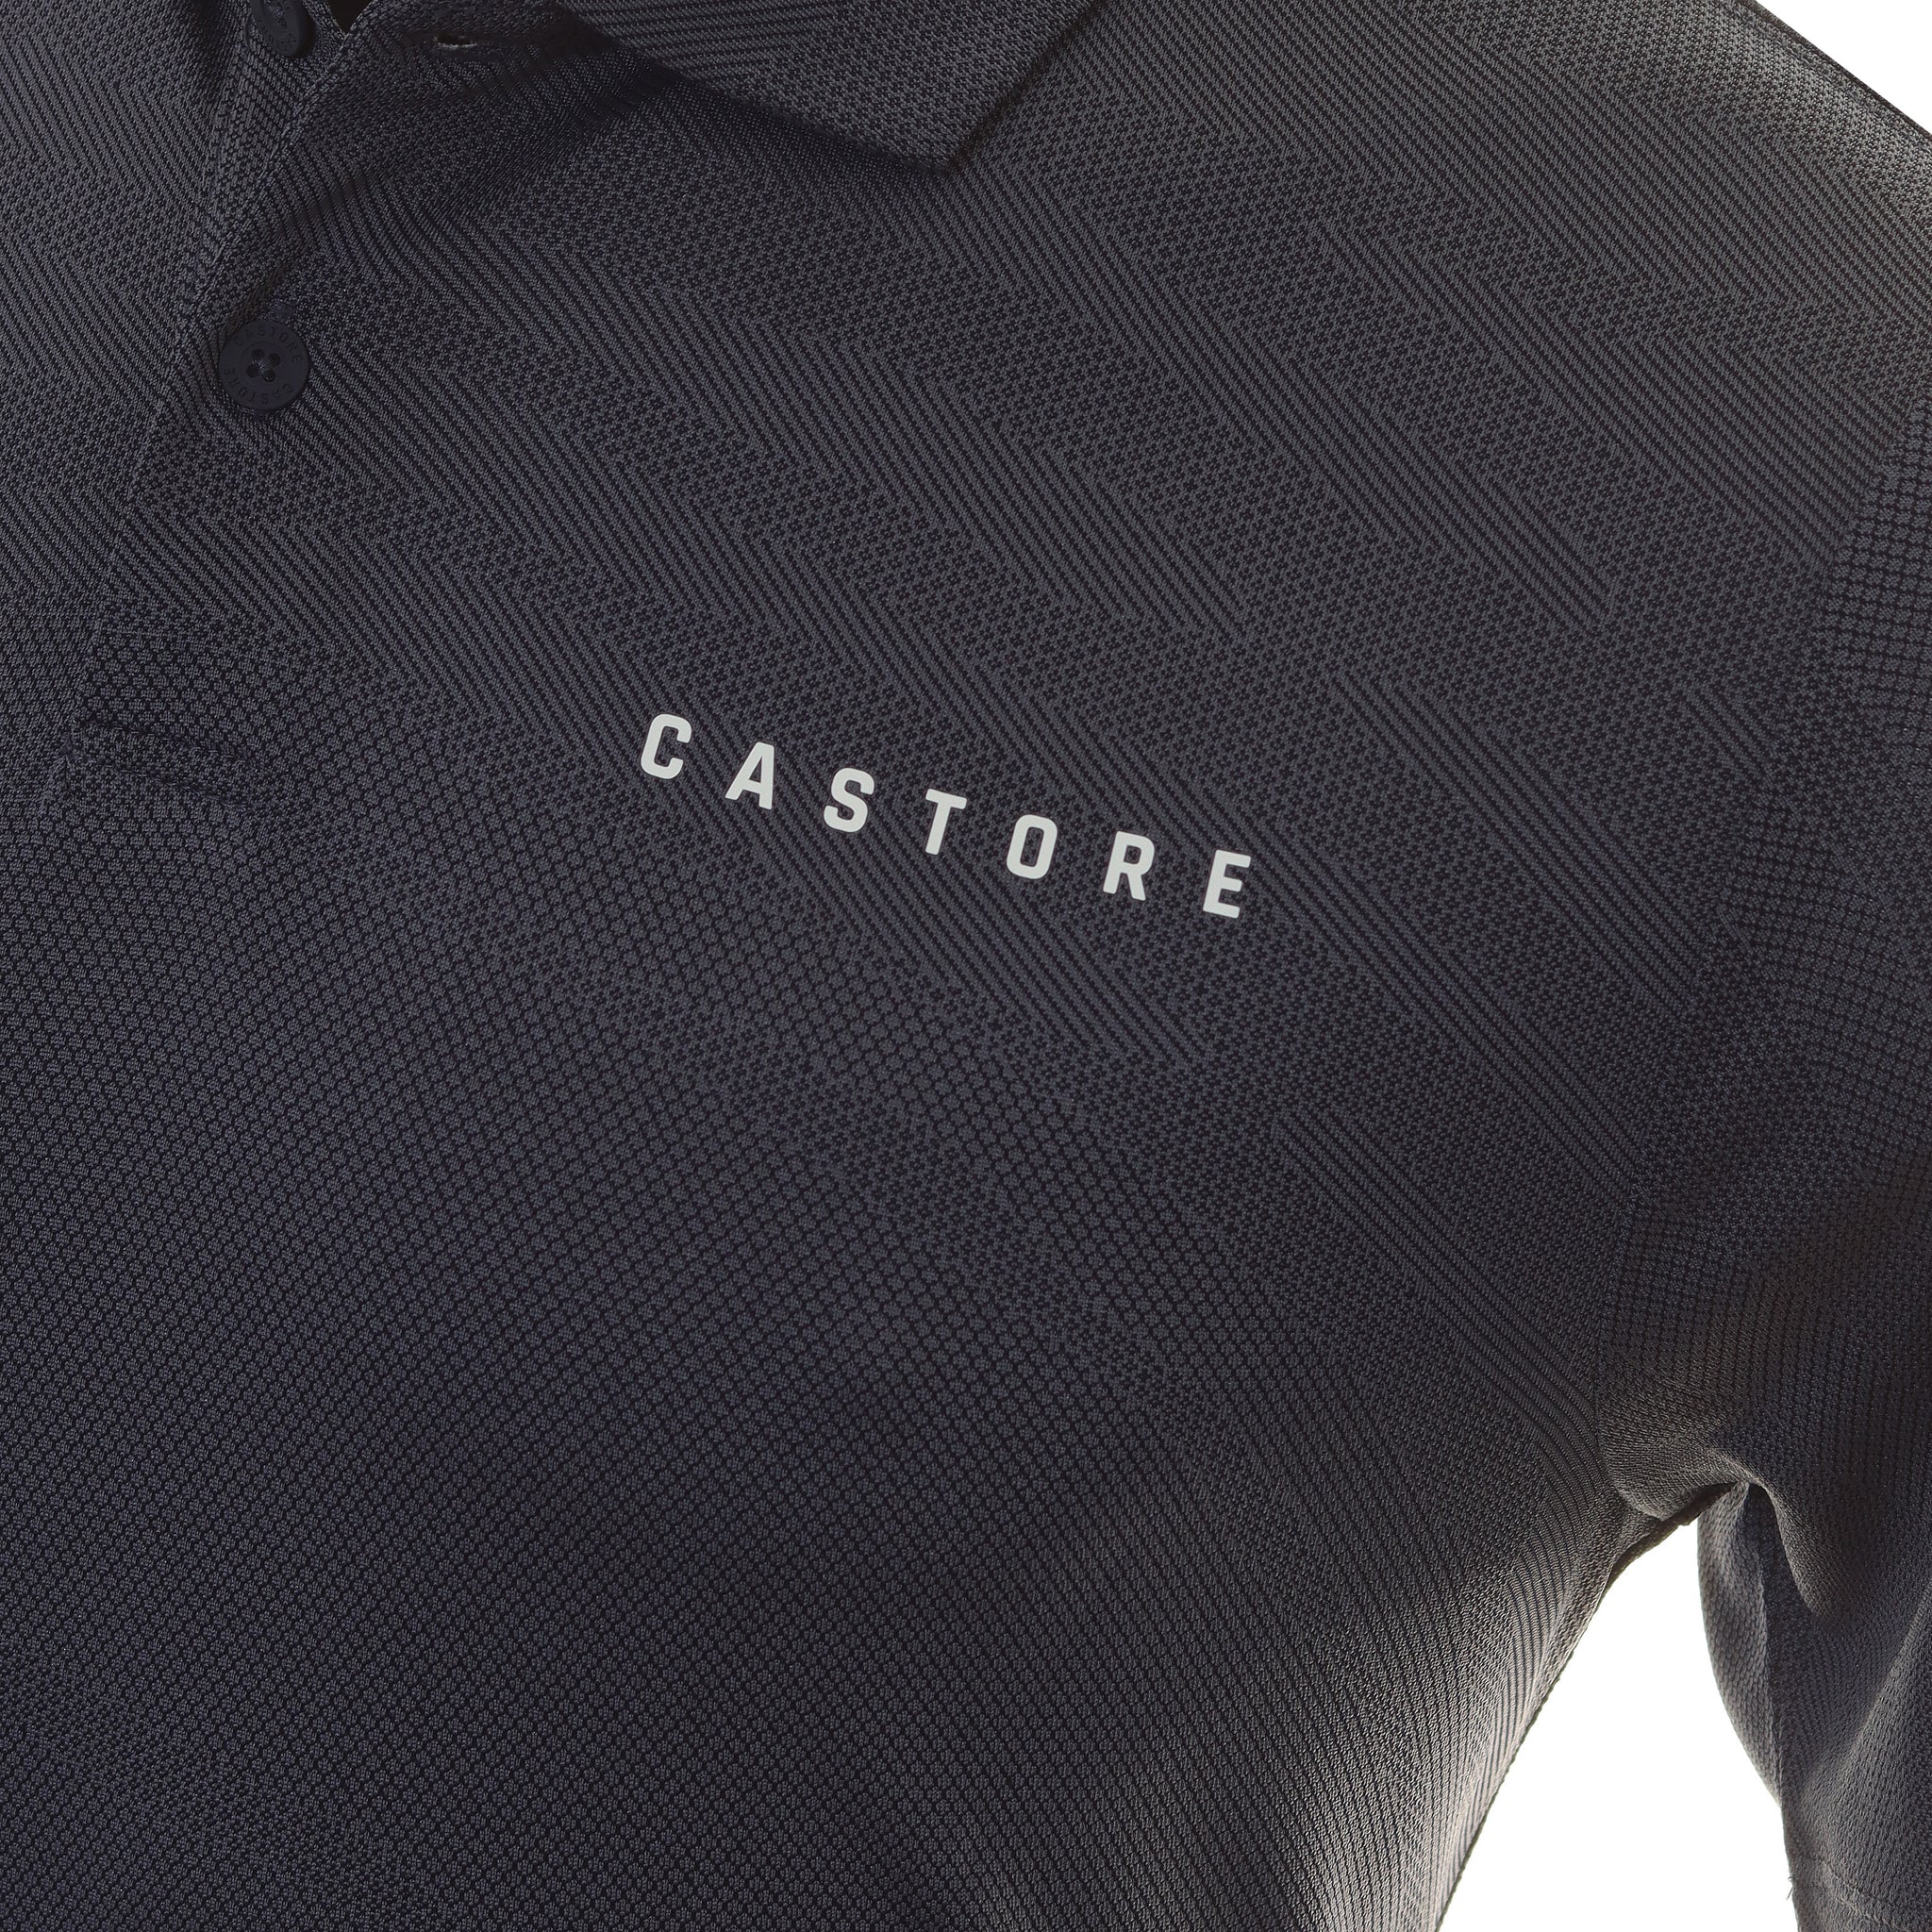 castore-engineered-knit-golf-polo-shirt-cma30175-b-midnight-navy-175-function18